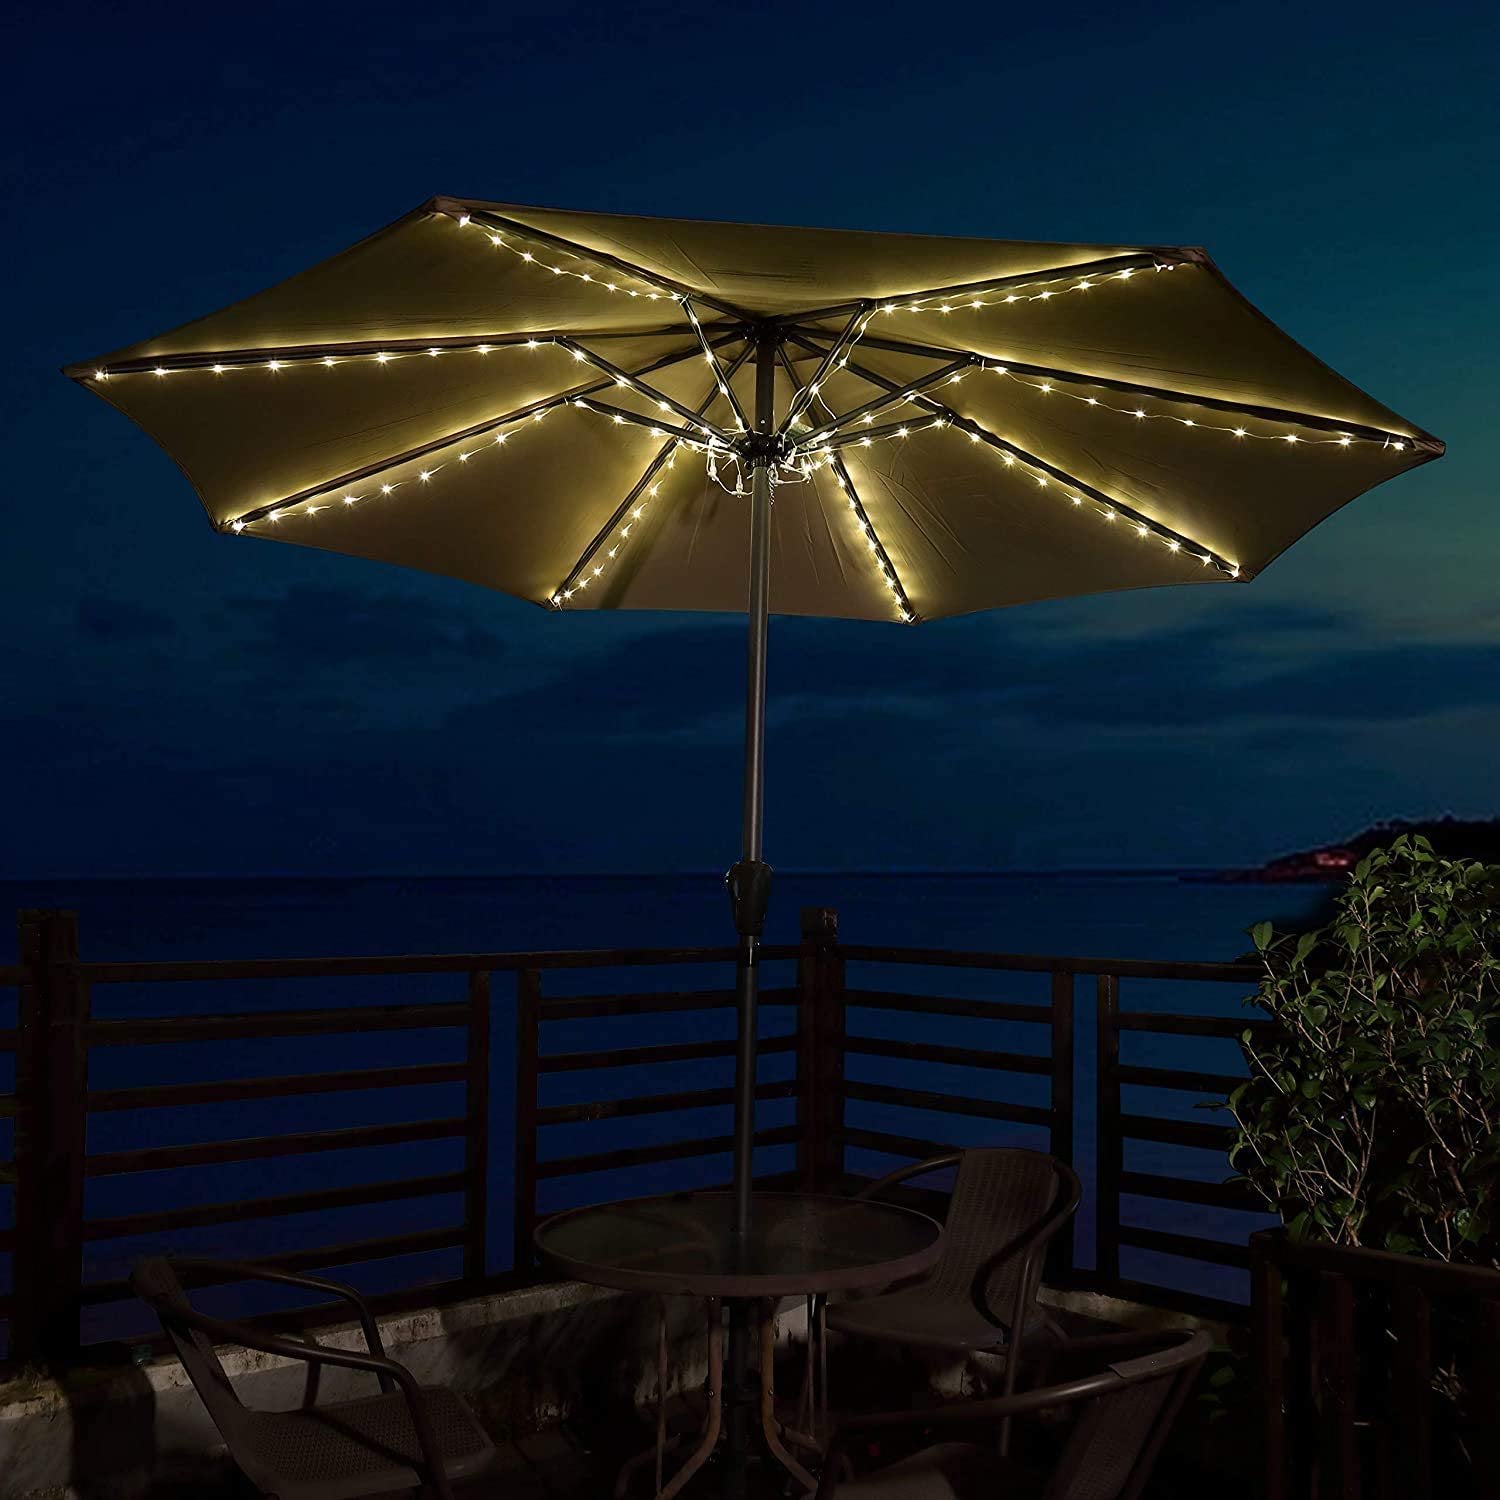 Patio Umbrella String Lights,Umbrella Solar Lights Waterproof Garden Yard Lamp, Warm White Light